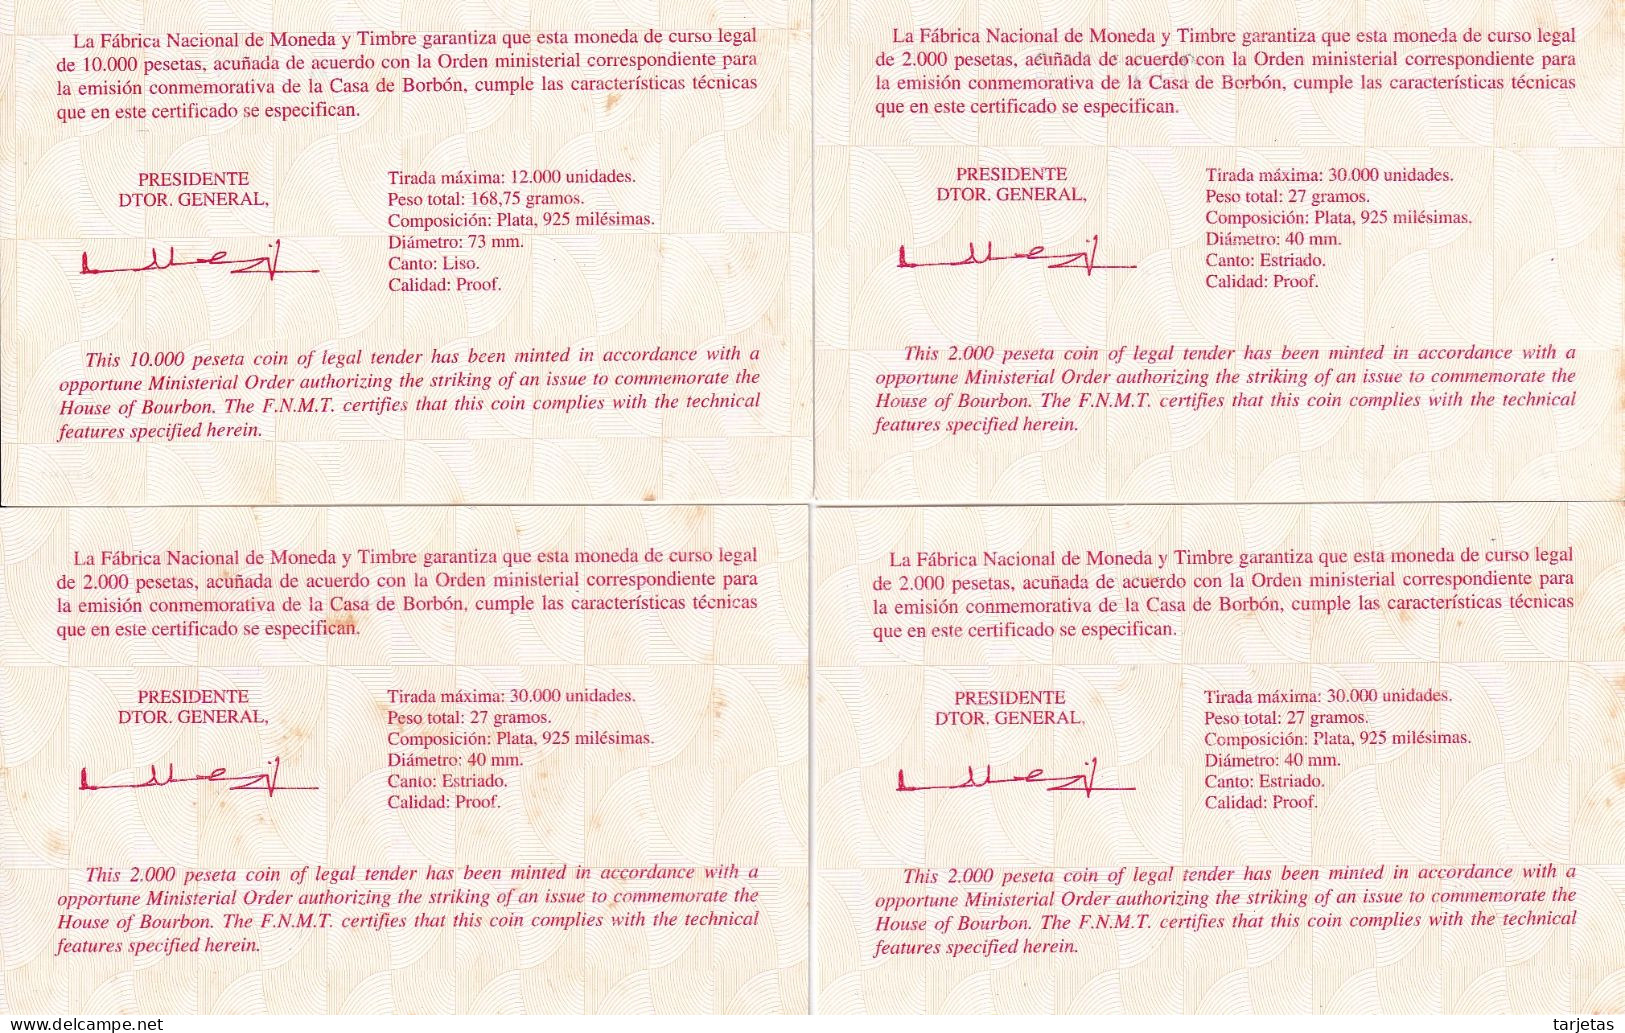 COLECCION DE 4 MONEDAS DE PLATA CASA DE BORBON 1998 ESTUCHE DE MADERA CERTIFICADO DE AUTENTICIDAD (COIN) SILVER-ARGENT - Mint Sets & Proof Sets